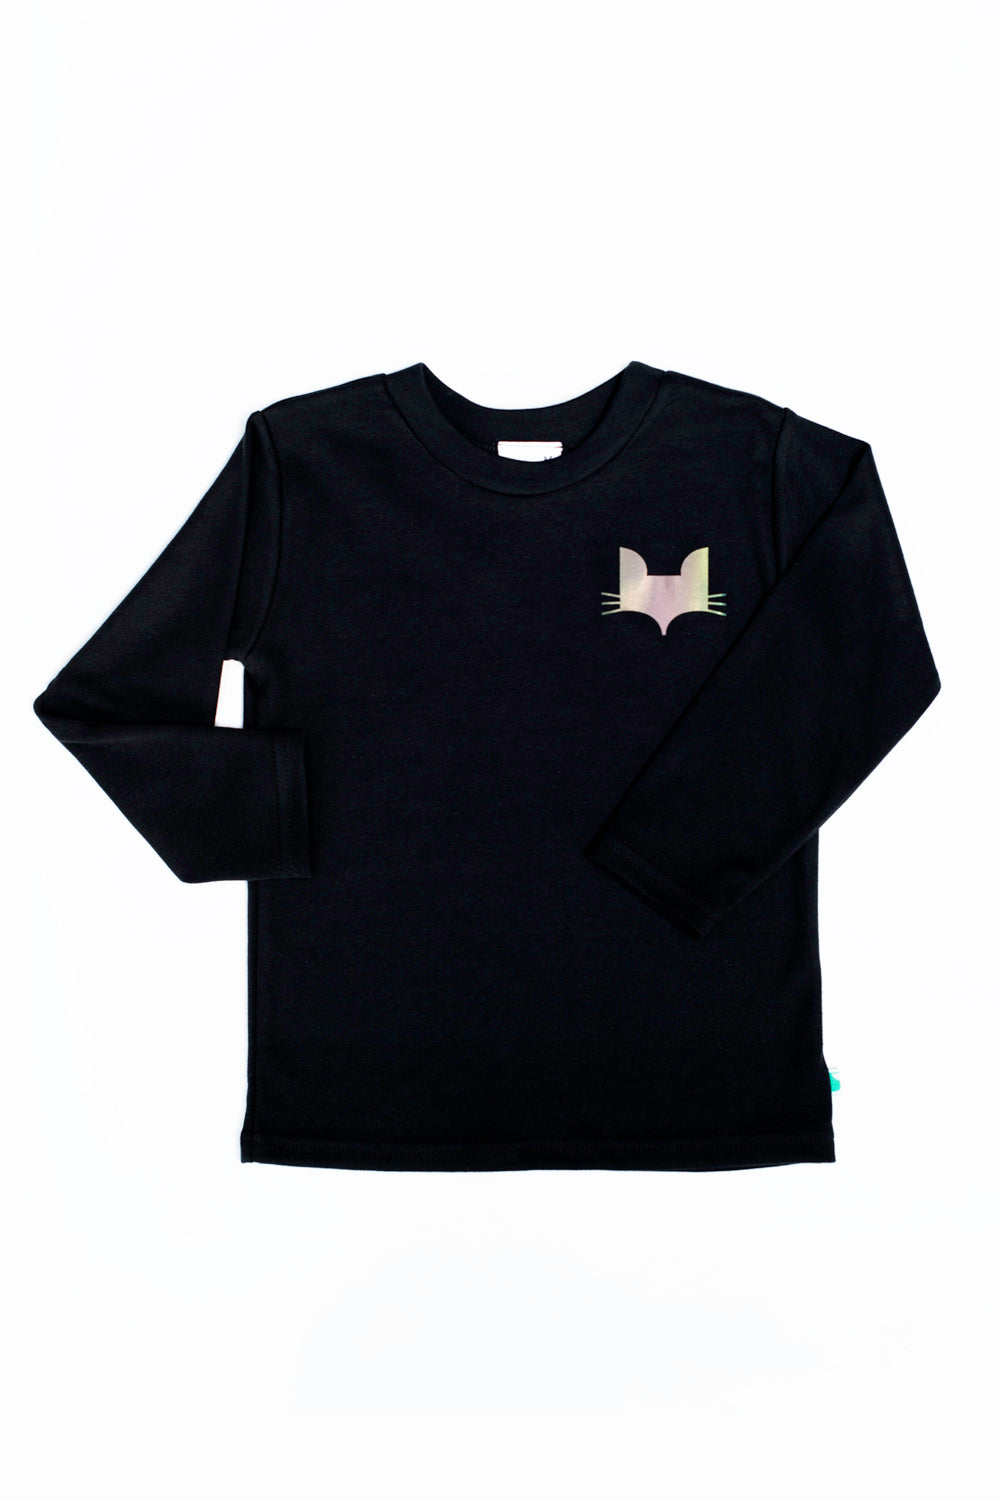 Unisex Reflective Fox head logo design black t-shirt, made from 100% super soft cotton